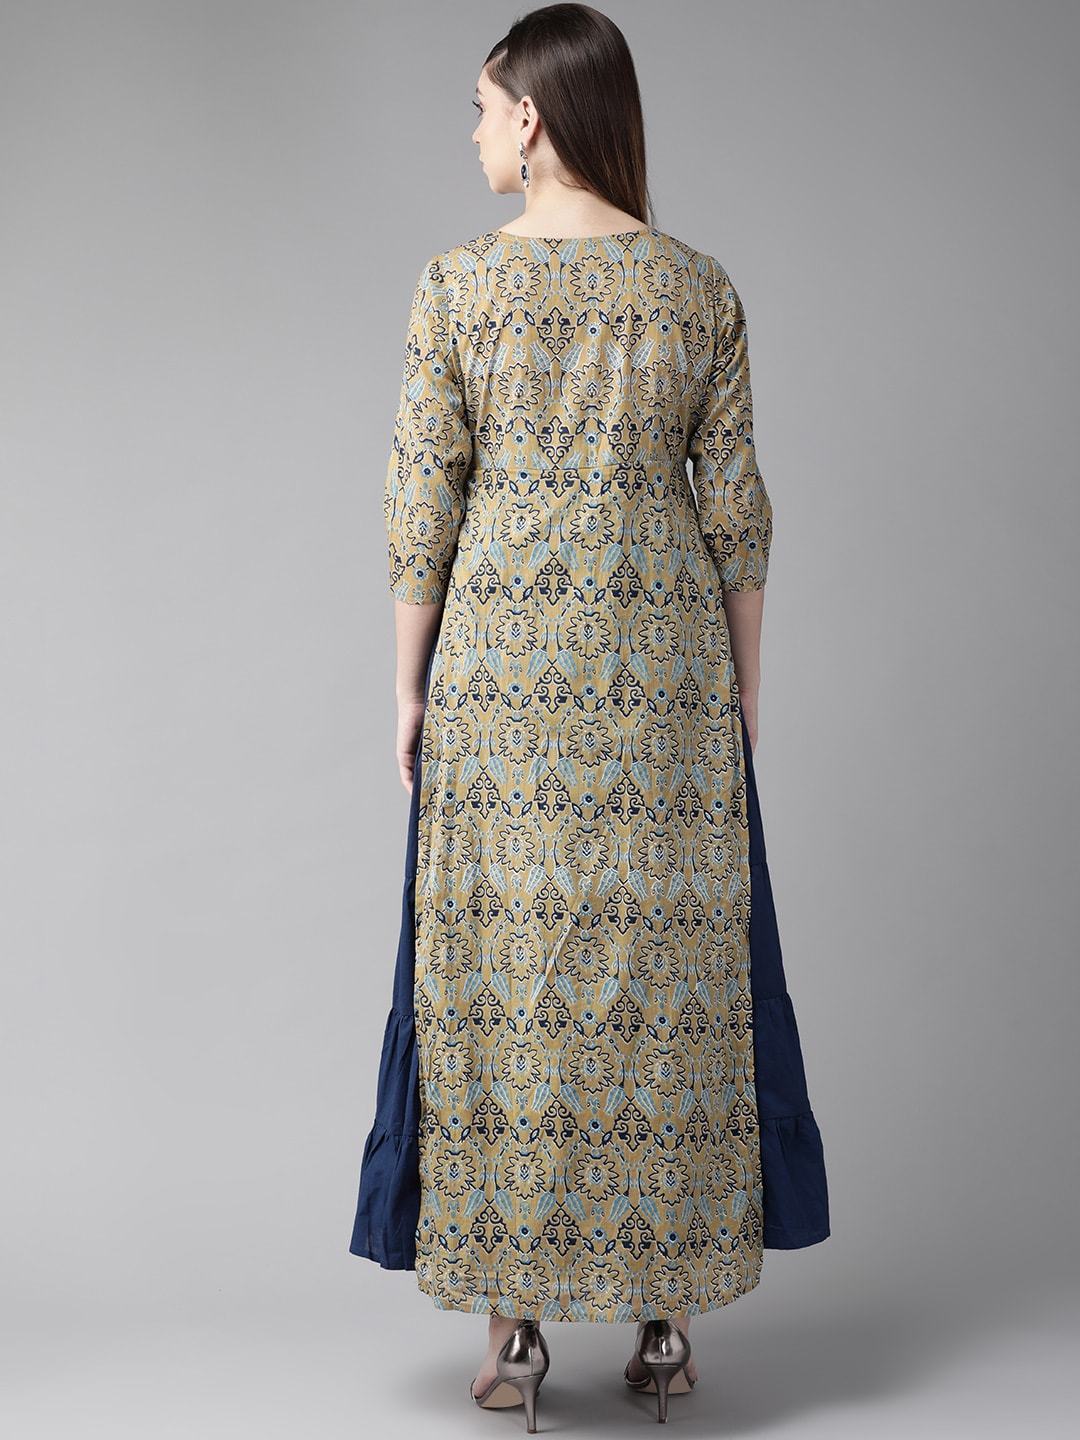 Women's  Navy Blue & Beige Printed Layered Maxi Dress - AKS